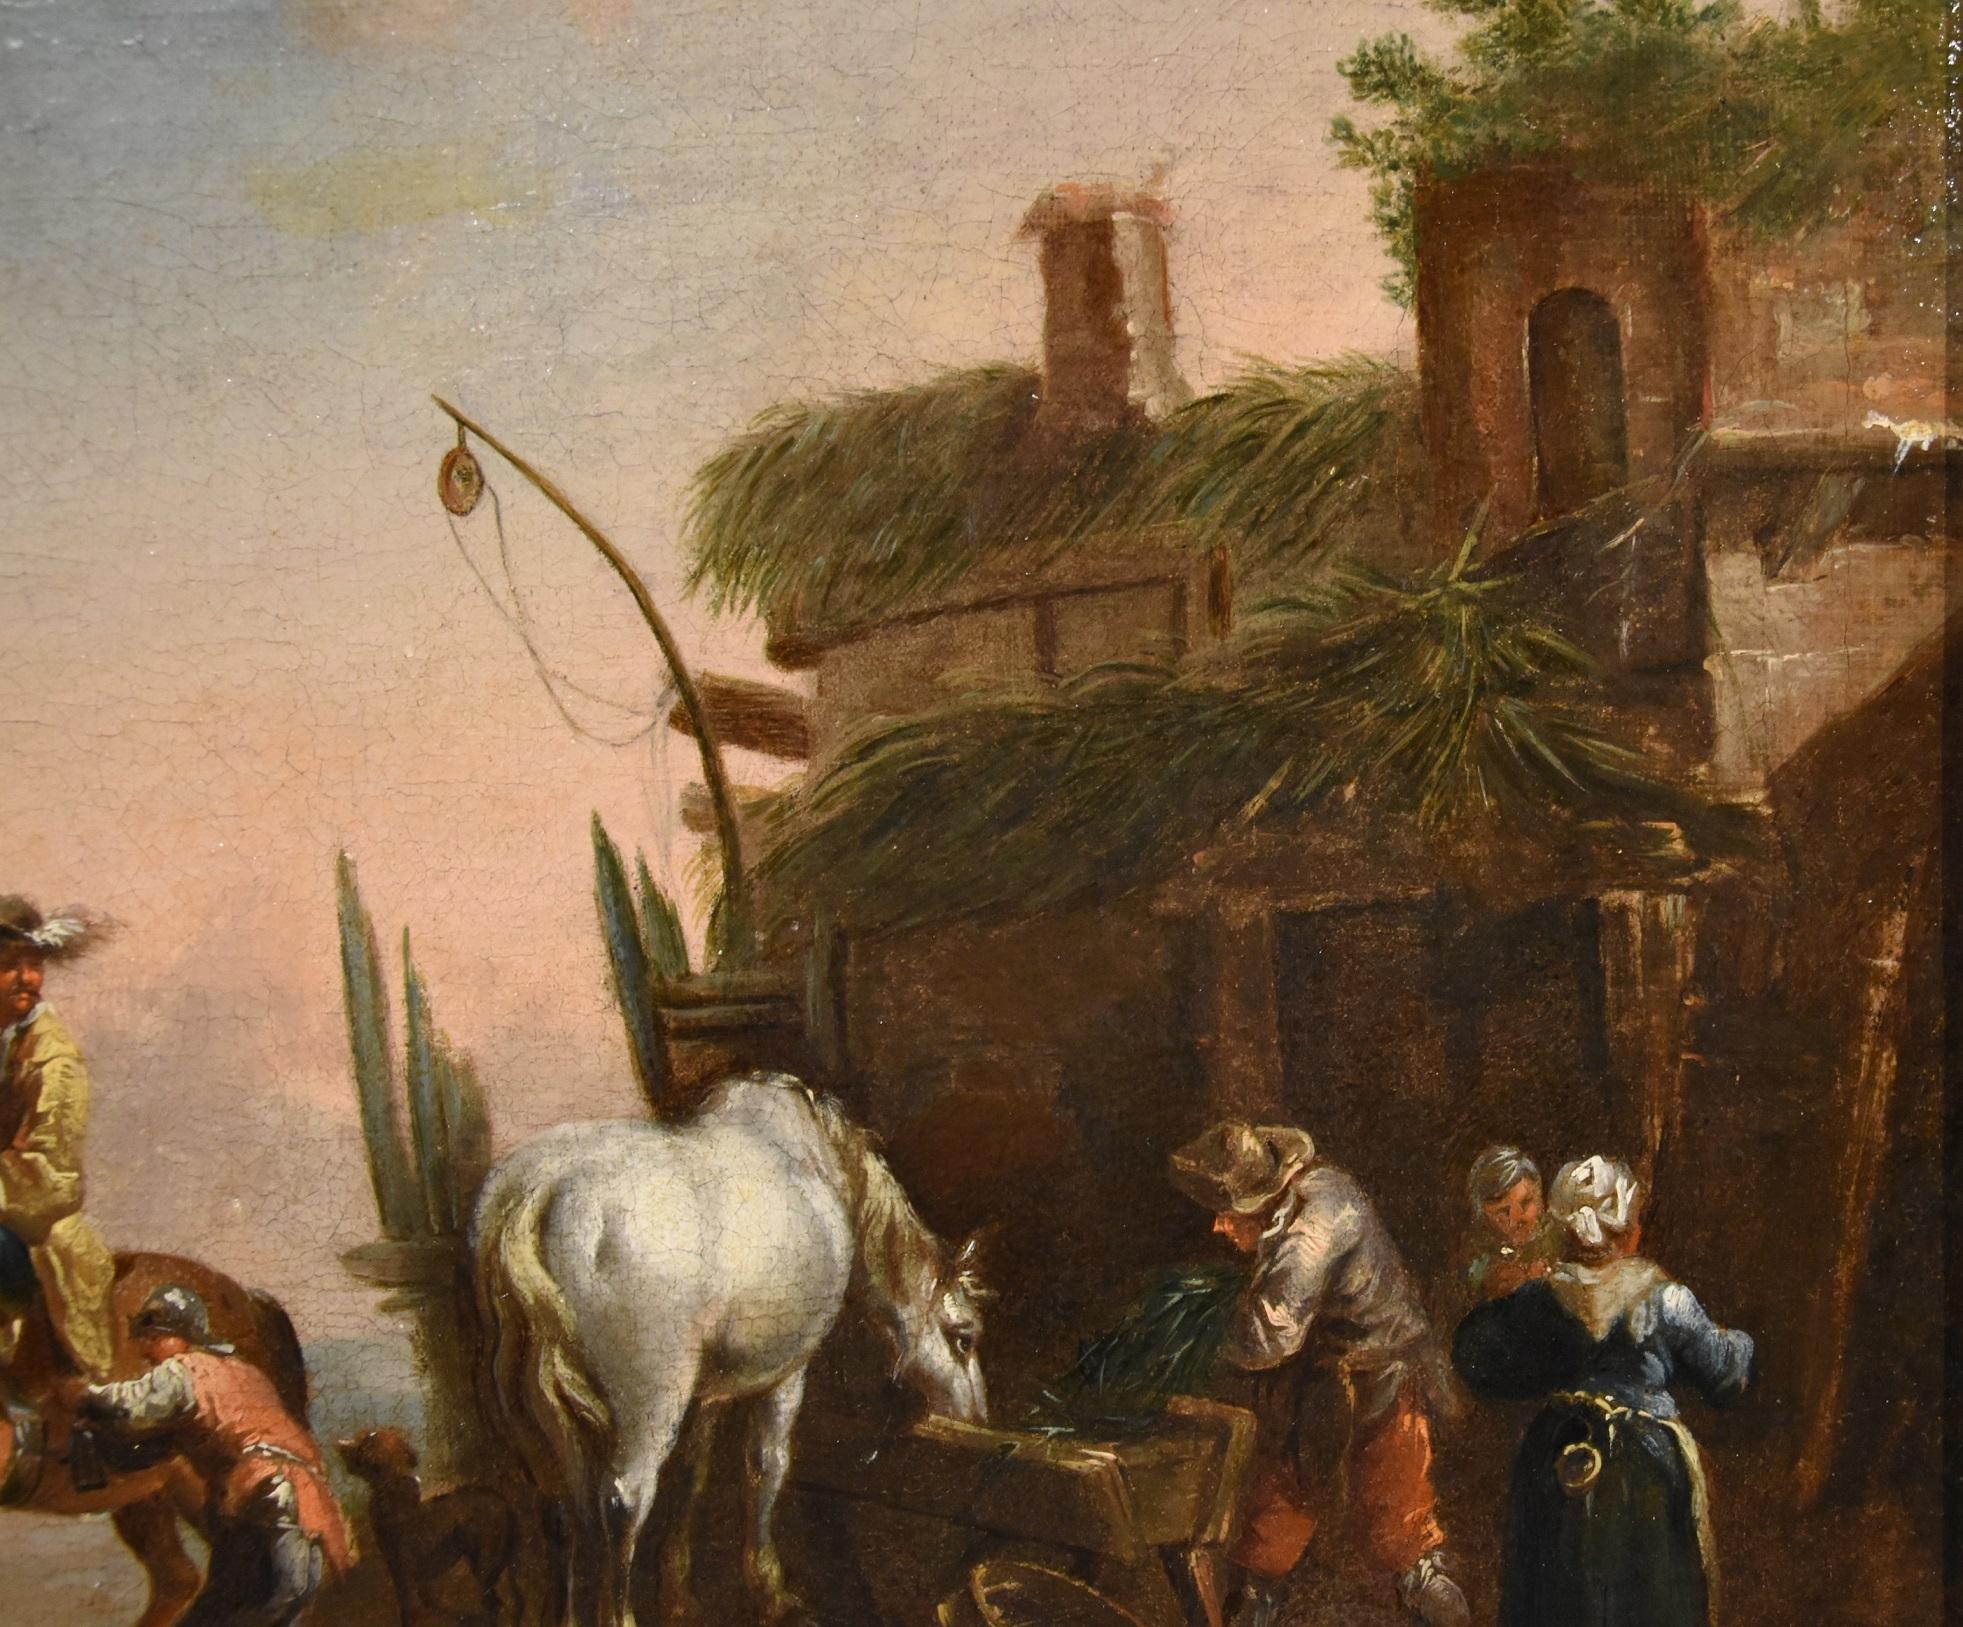 Knight Van Douw Paint Oil on canvas Old master 17/18th Century Flemish Art Italy For Sale 1